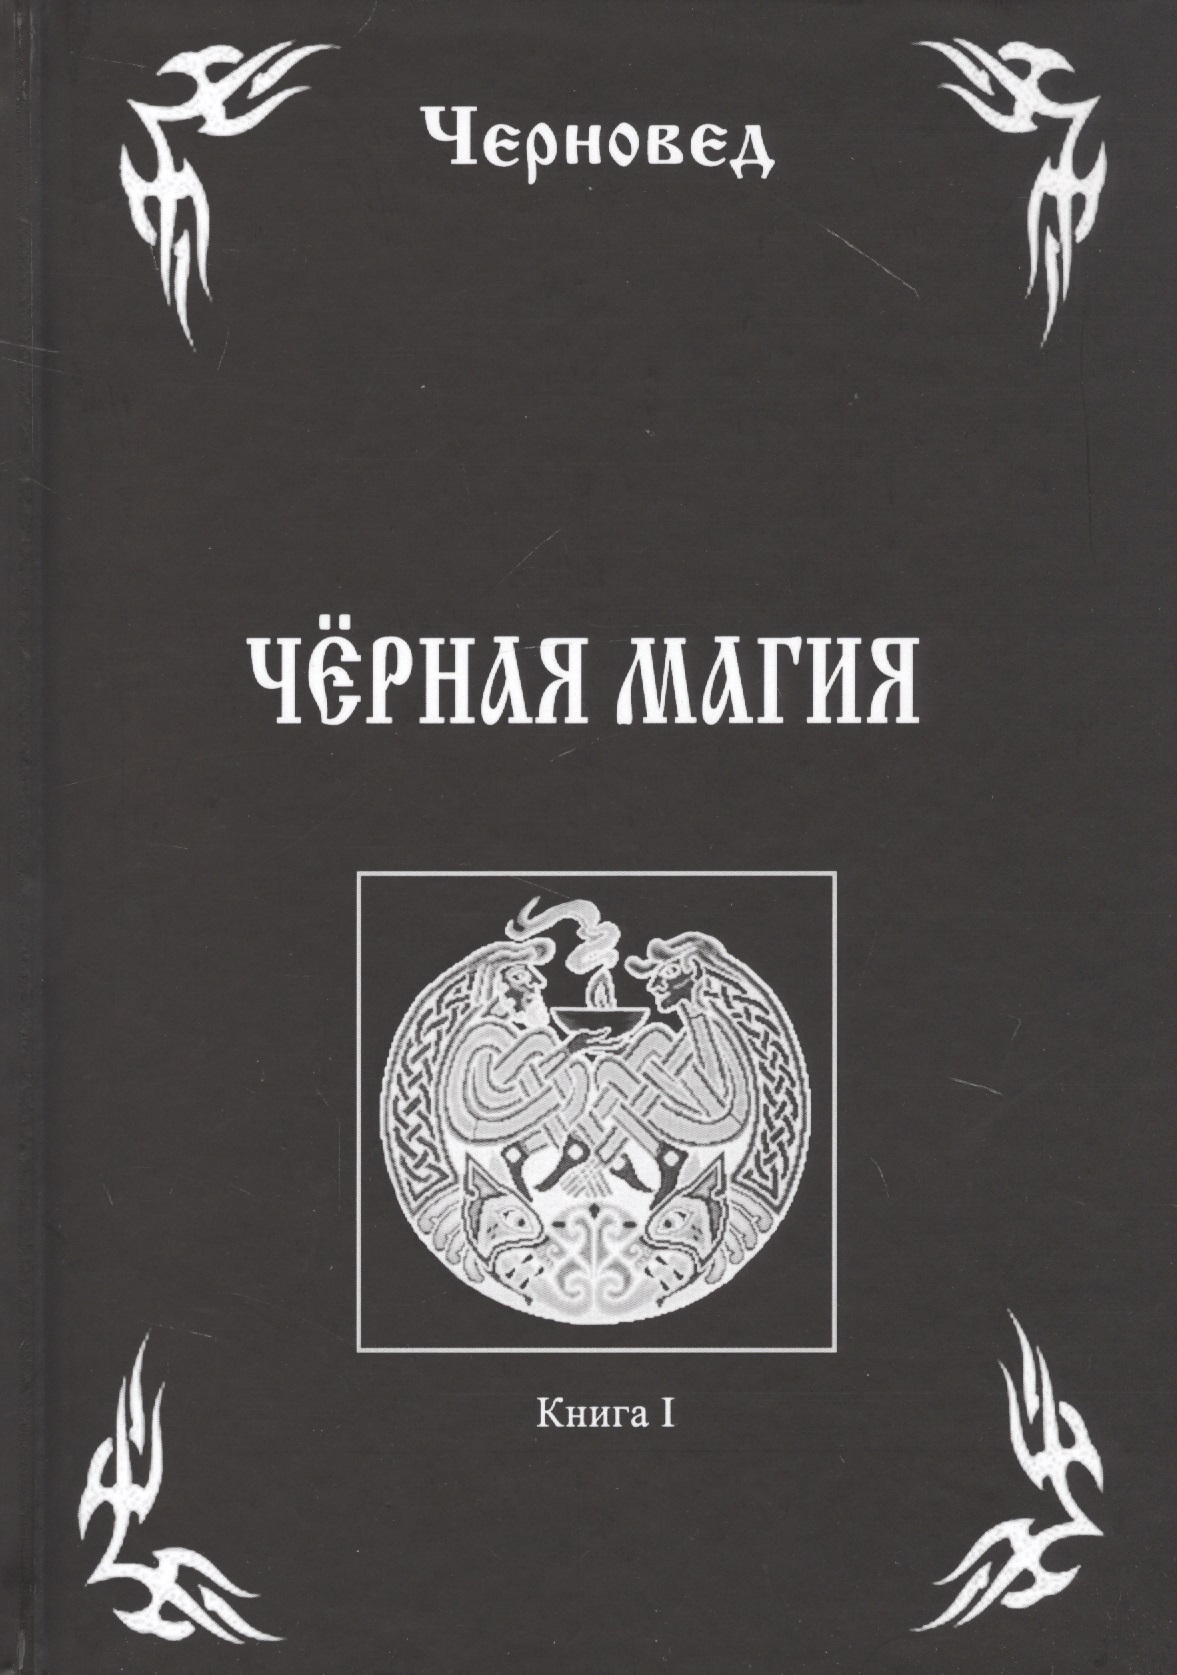 Черновед - Черная Магия Кн.1 (Черновед)